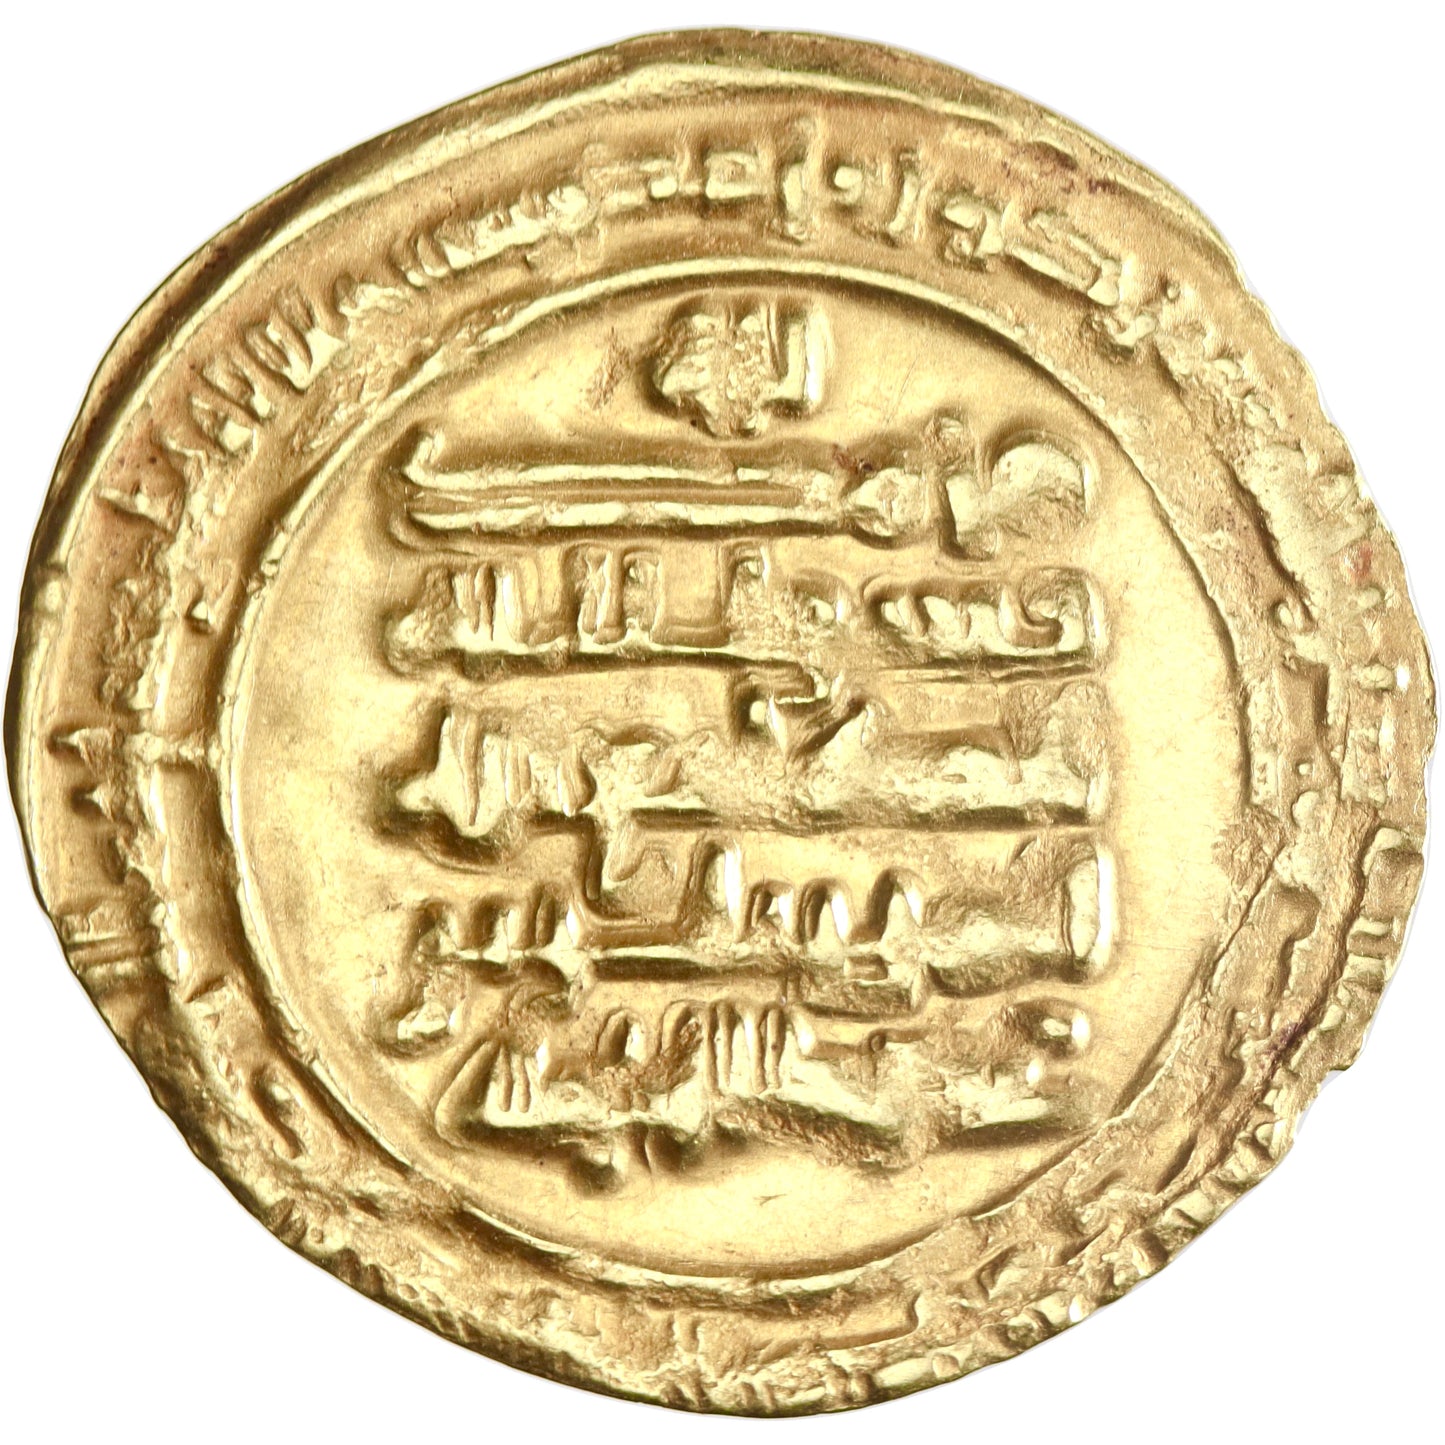 Buwayhid, Samsam al-Dawla Abu Kalijar al-Marzuban, gold dinar, Suq al-Ahwaz mint, AH 369, citing al-Ta'i and 'Adud al-Dawla